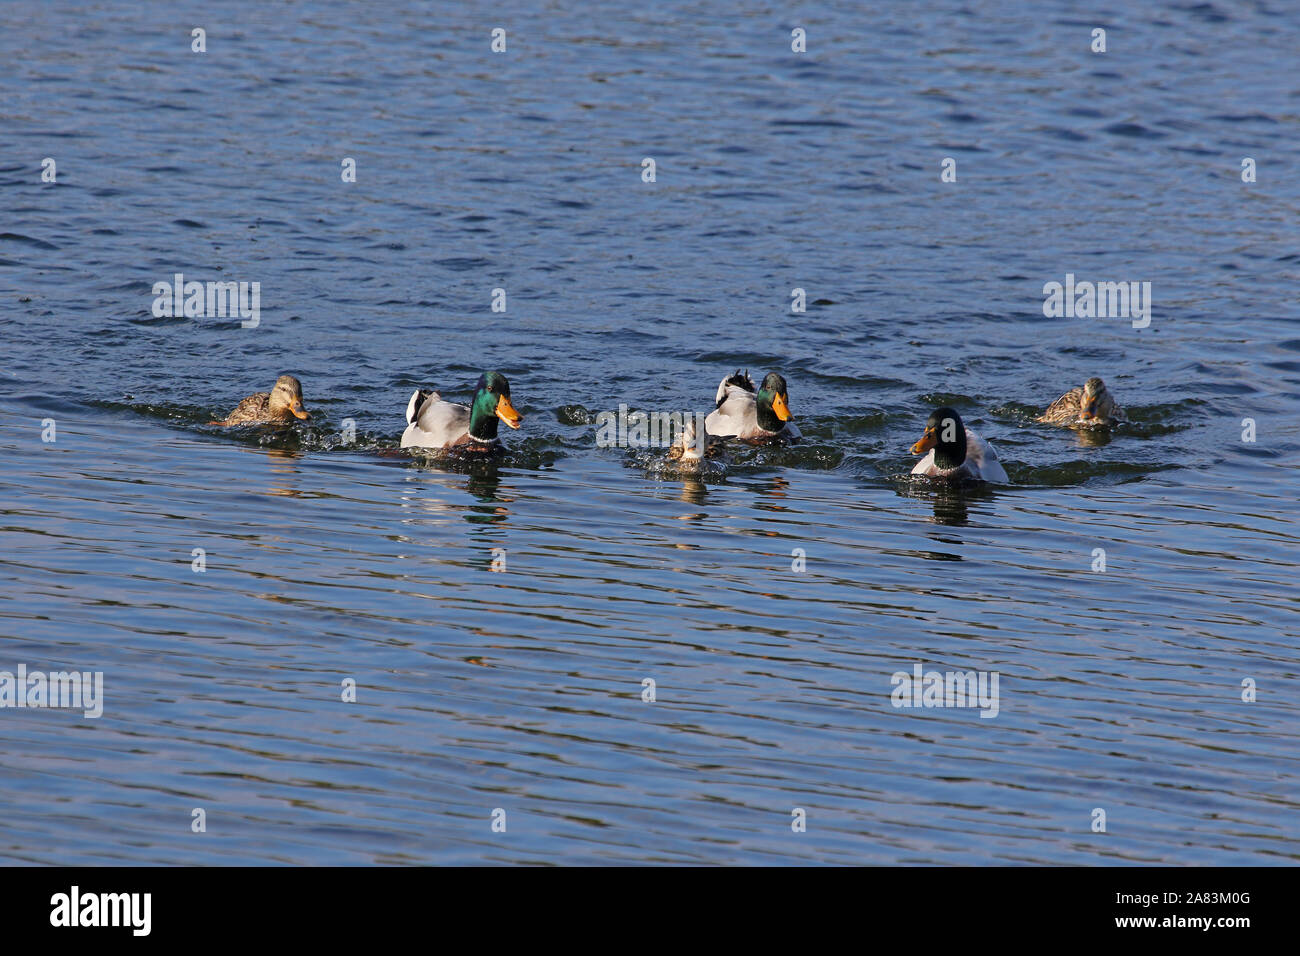 three pairs of mallards male and female ducks Latin name Anas platyrhynchos family anatidae swimming in a lake in Porto Potenza Picena in Italy Stock Photo